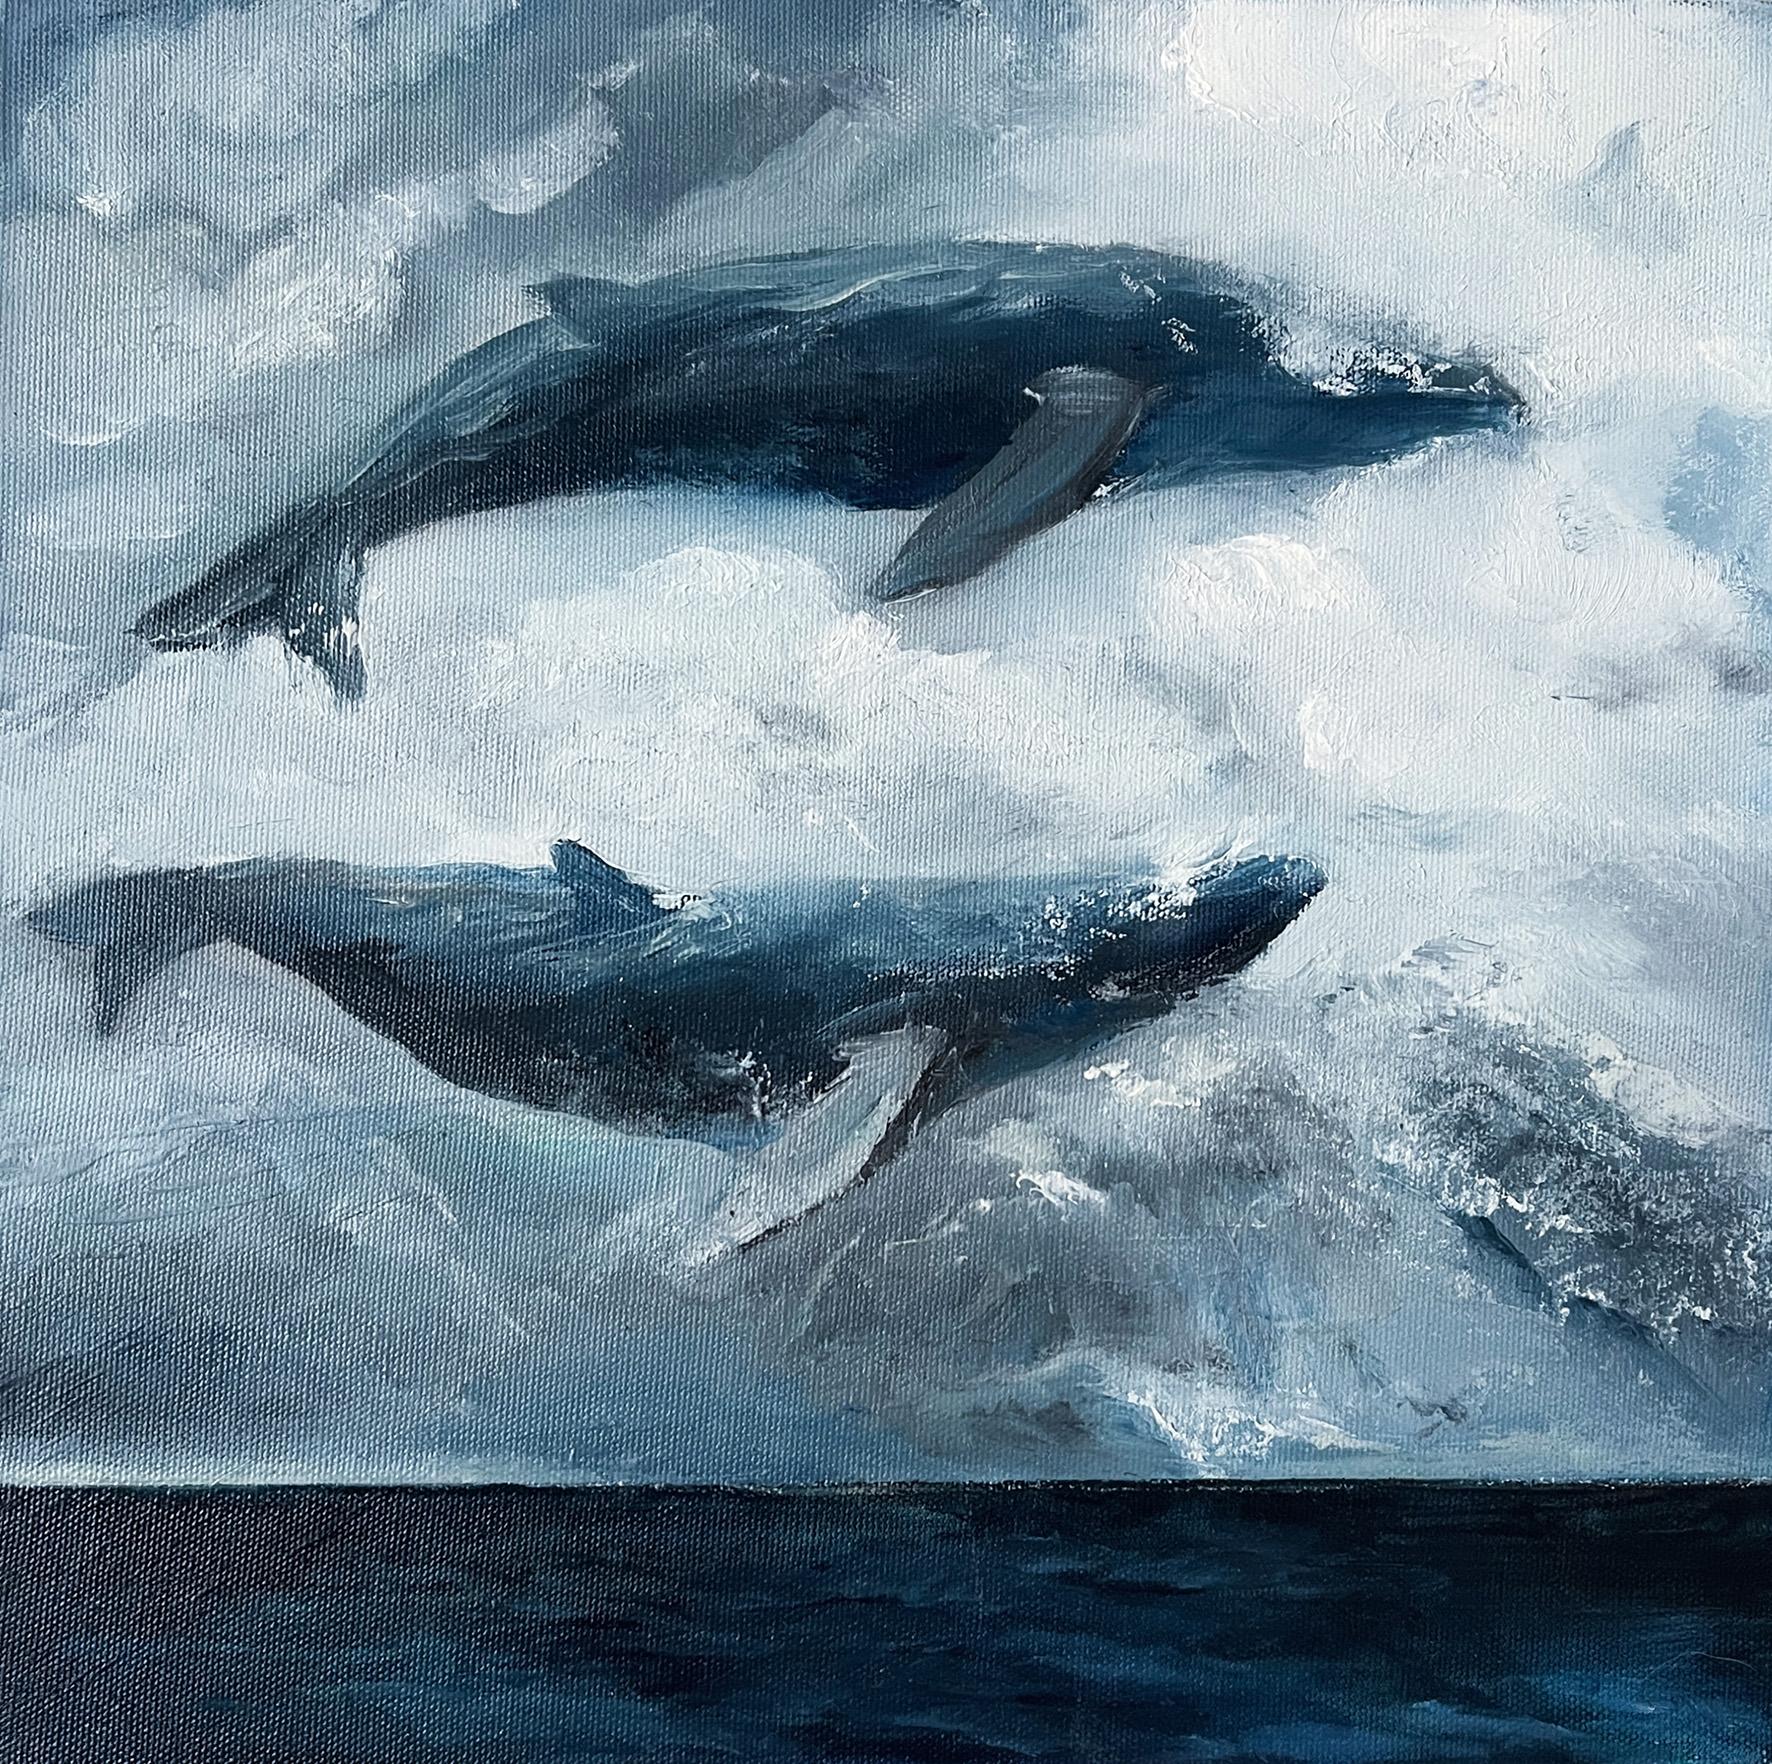 "Heavenly ocean" whales in the sky, seascape, sky, clouds, storm, rain